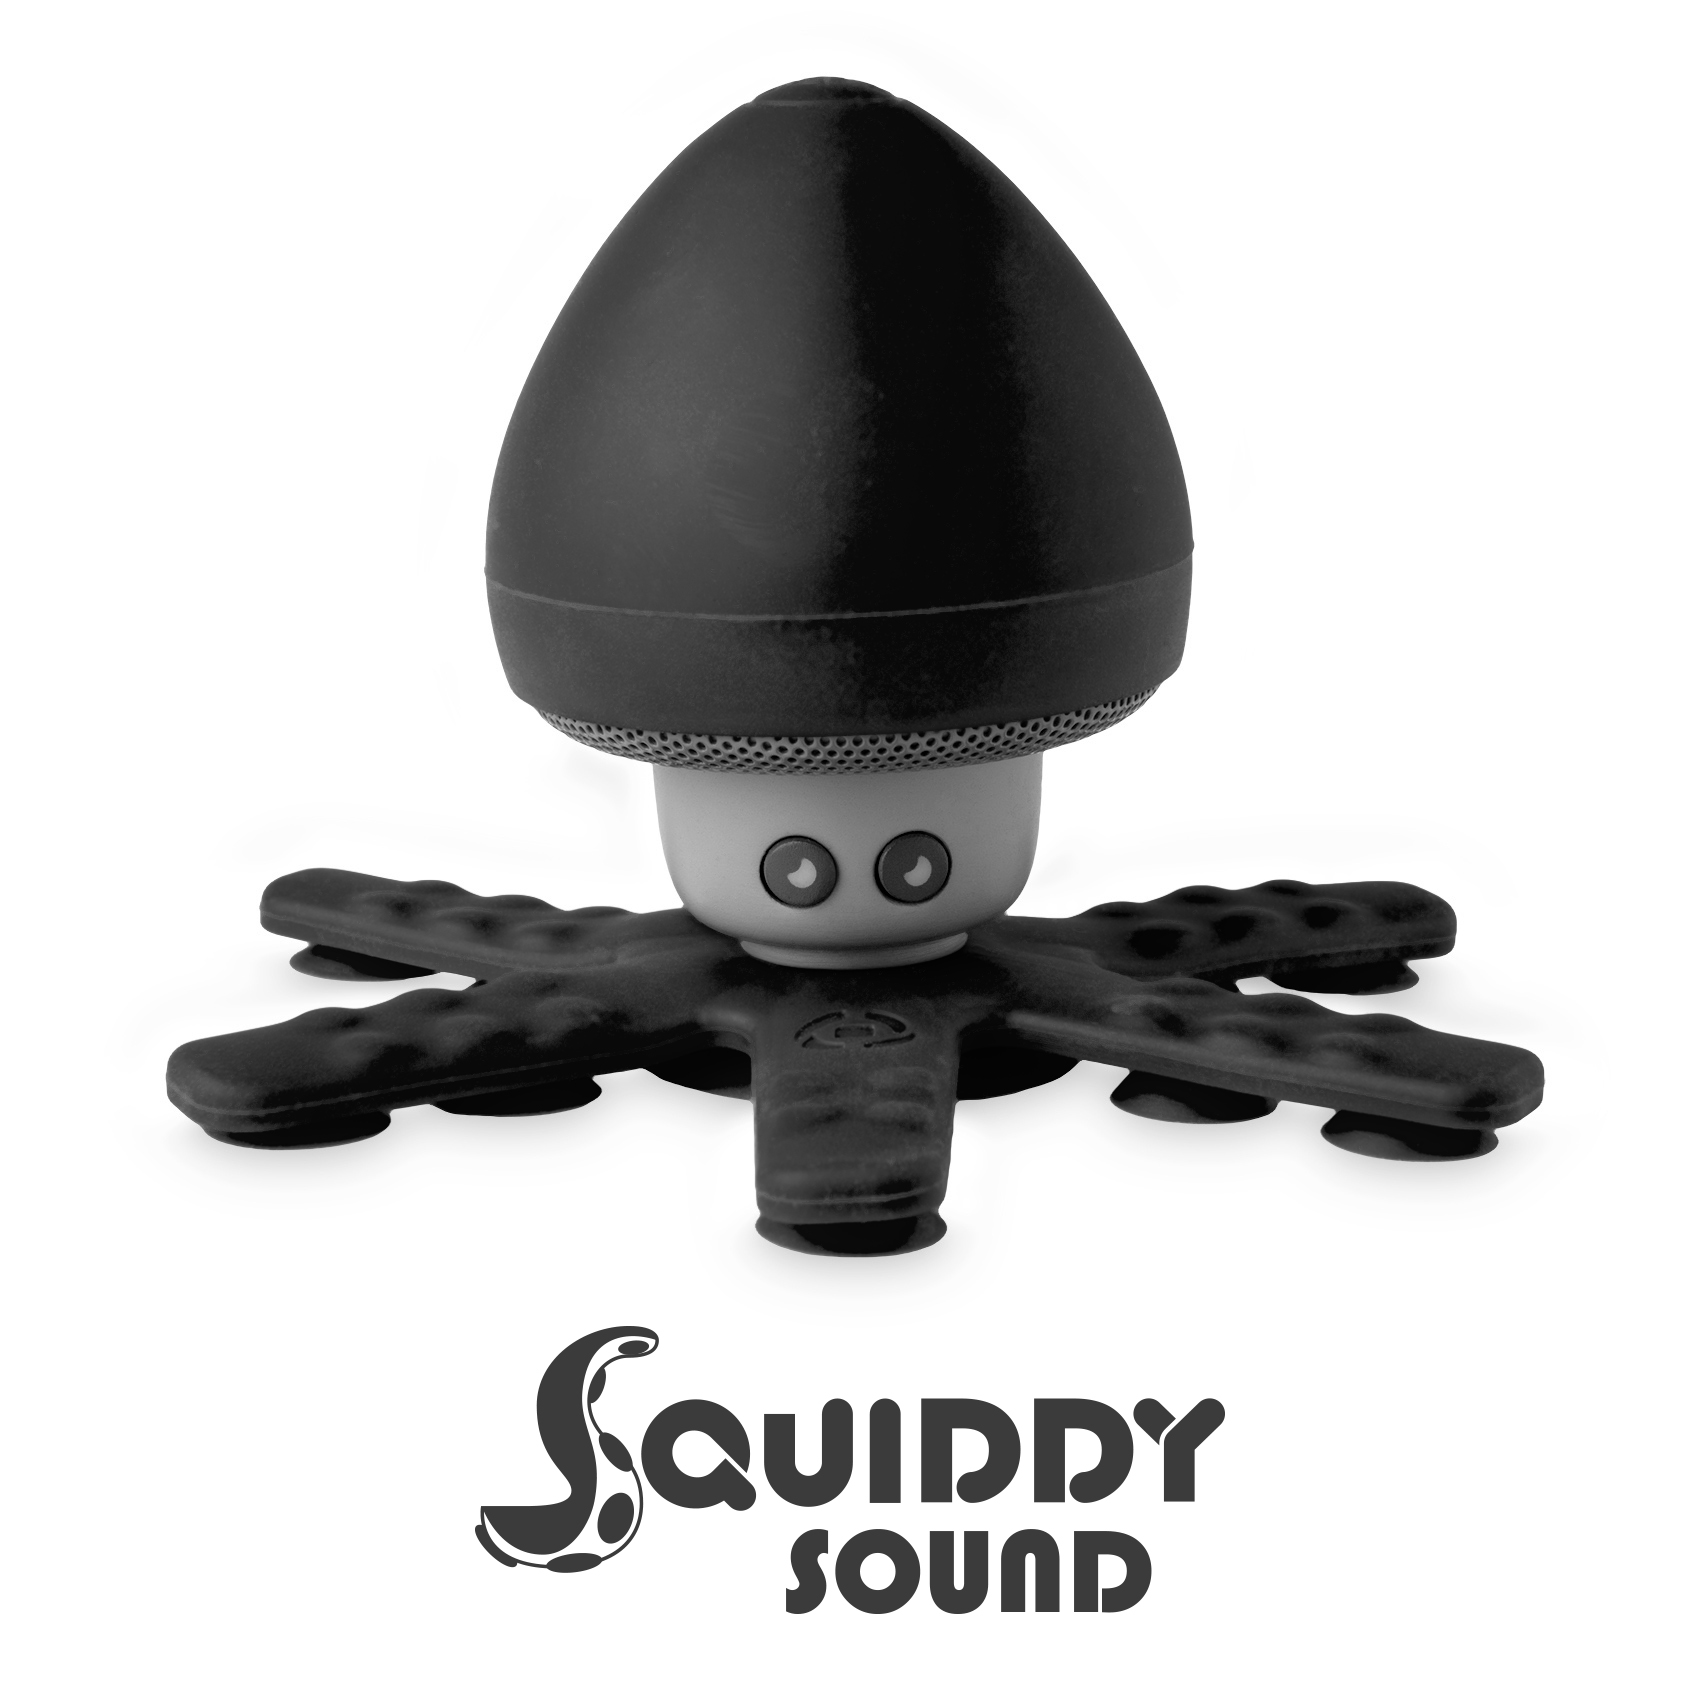 CELLY Bluetooth vodootporni zvučnik sa držačima SQUIDDYSOUND u CRNOJ boji slika 1